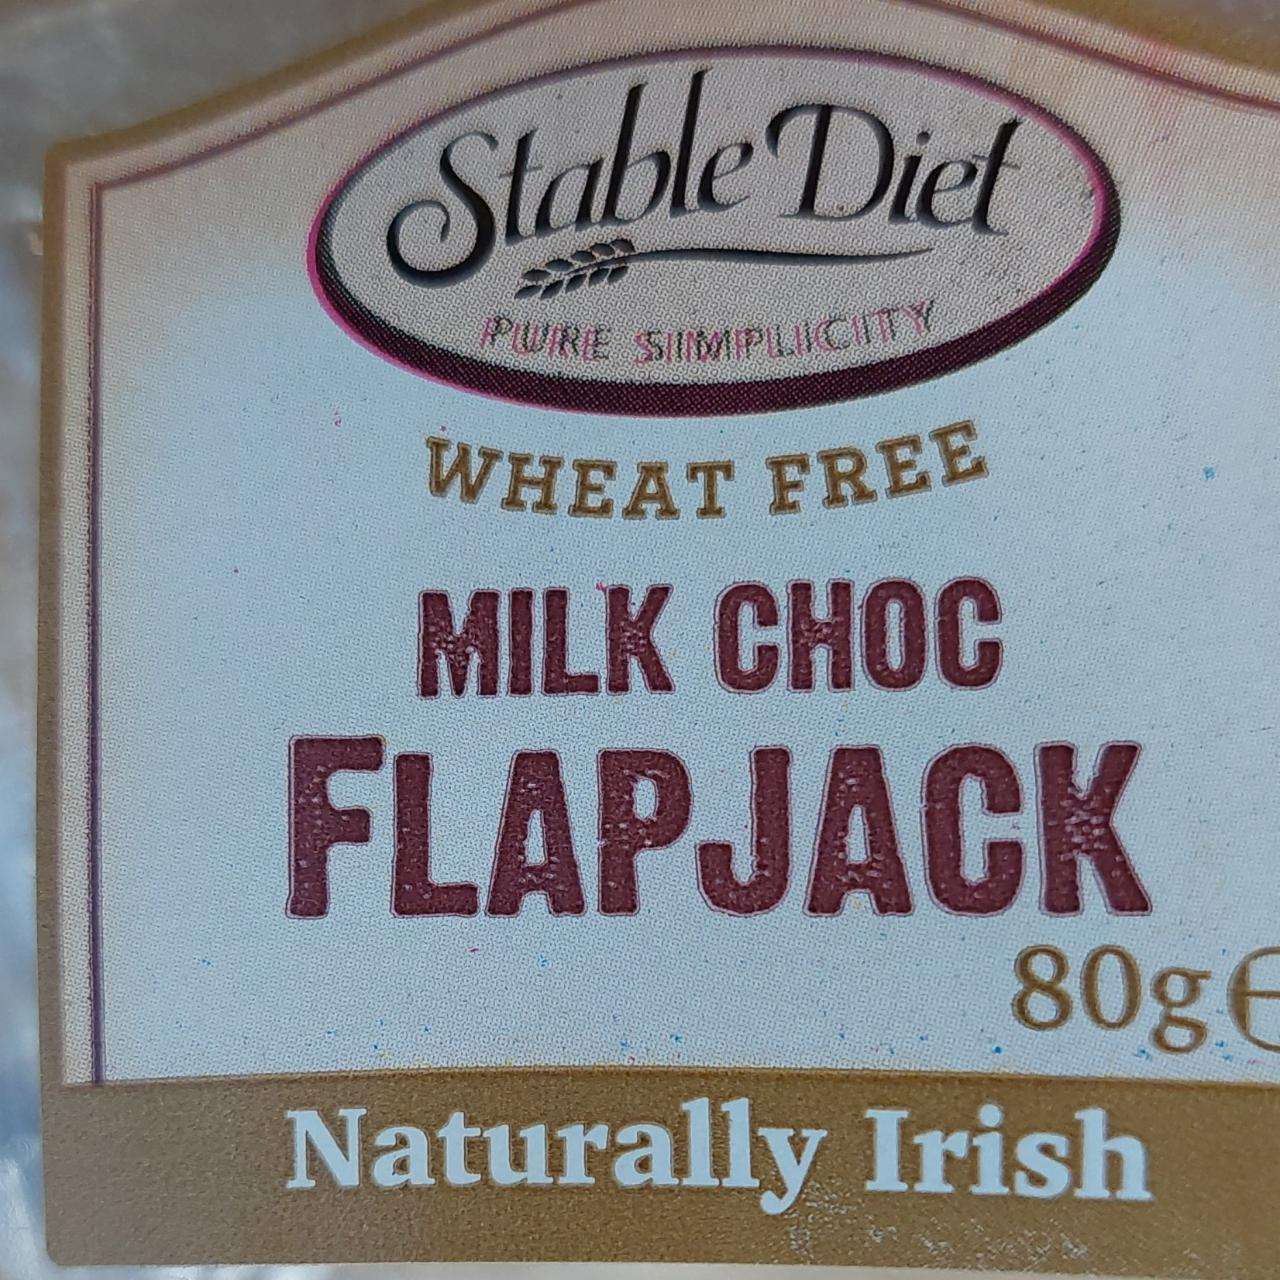 Fotografie - Milk Choc Flapjack Naturally Irish Stable Diet